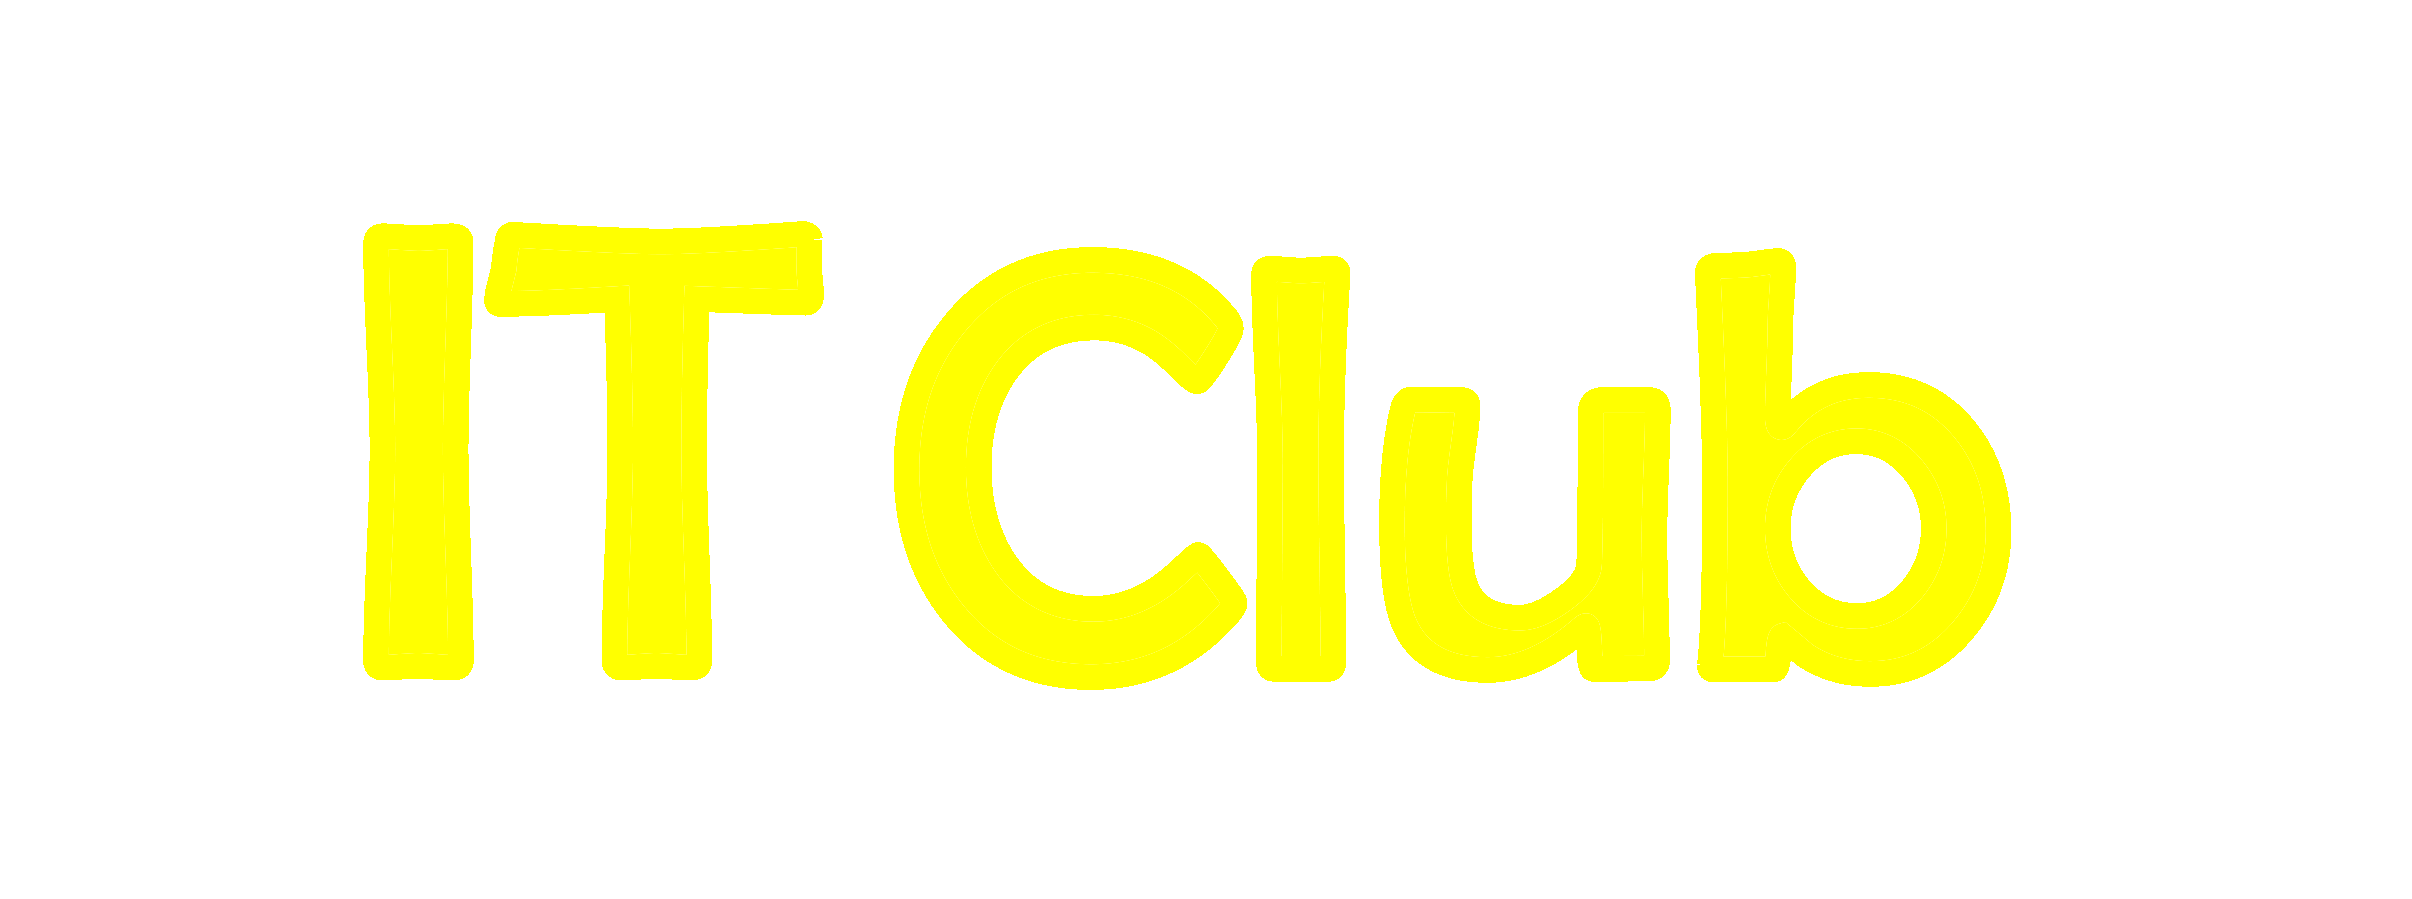 IT Club